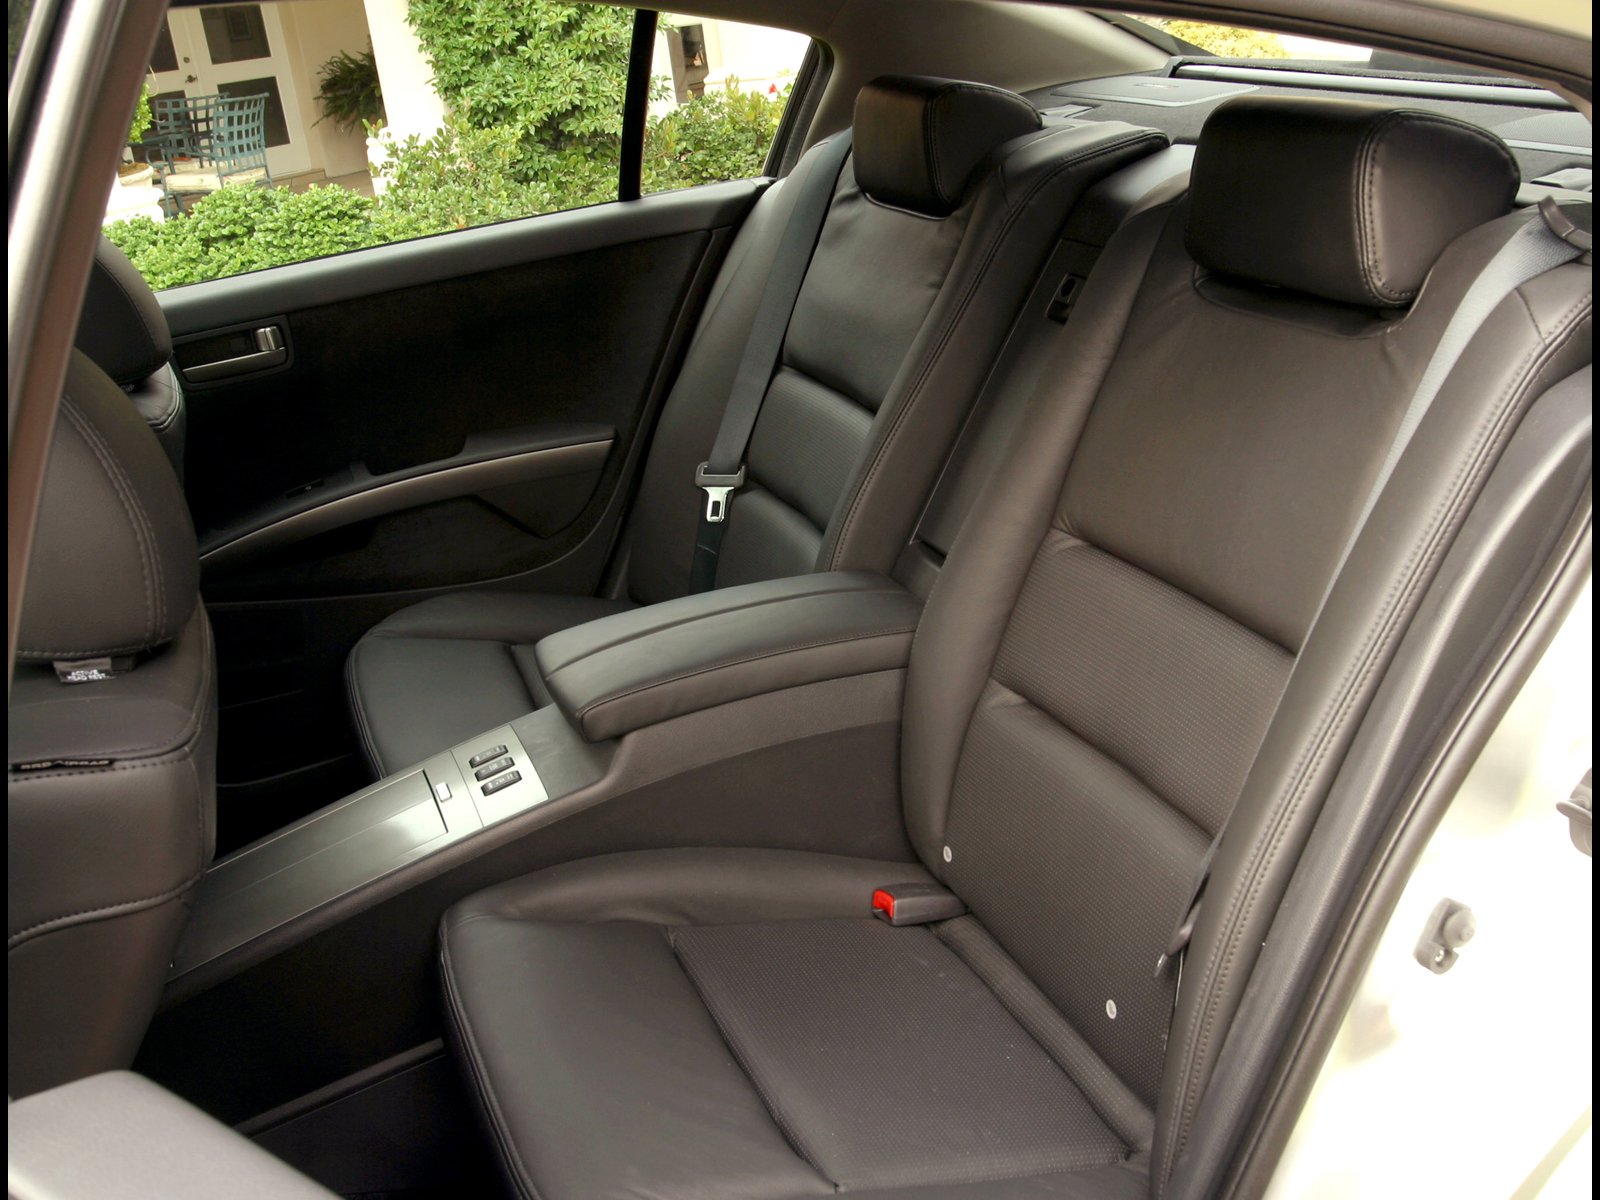 2004 Nissan maxima custom interior #9